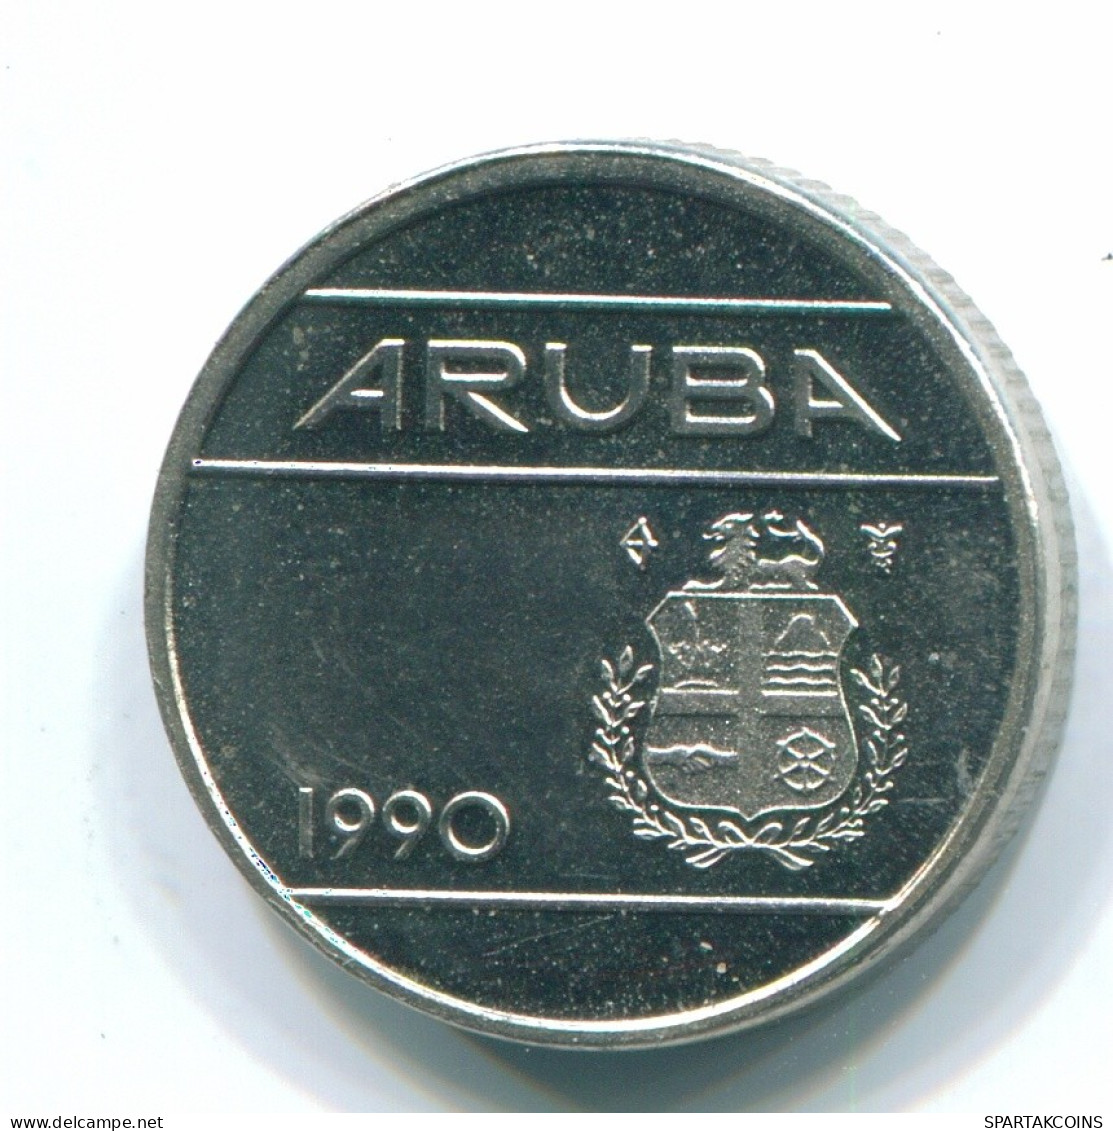 10 CENTS 1990 ARUBA (NIEDERLANDE NETHERLANDS) Nickel Koloniale Münze #S13628.D.A - Aruba